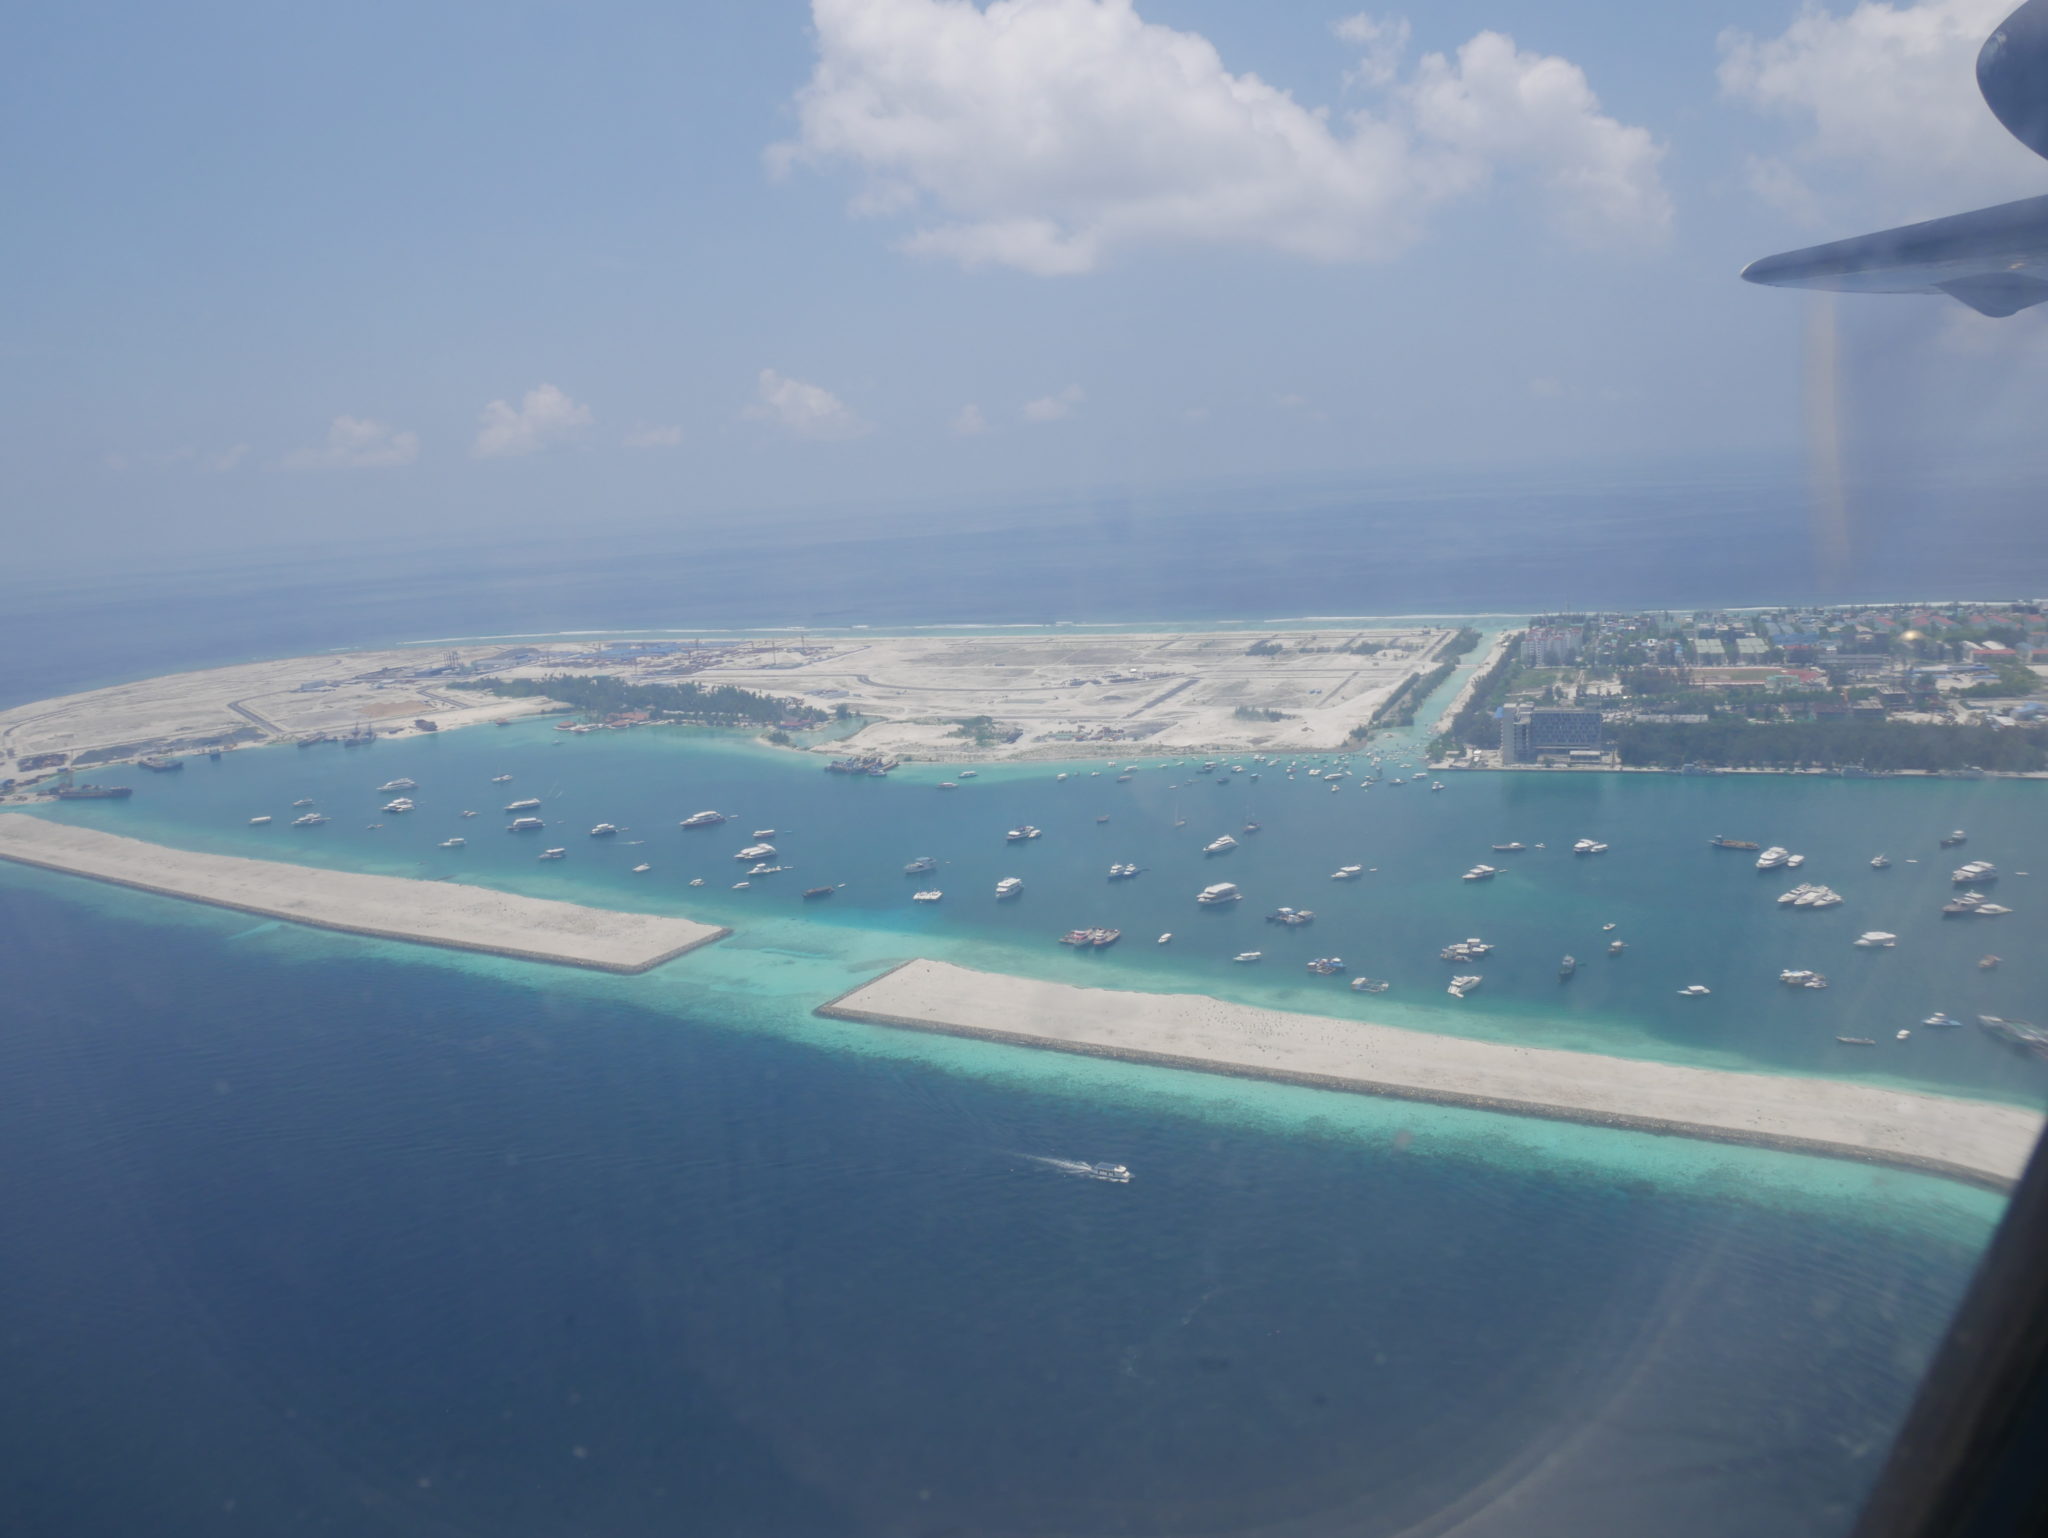 Hulhumalé island, Maldives from the sky